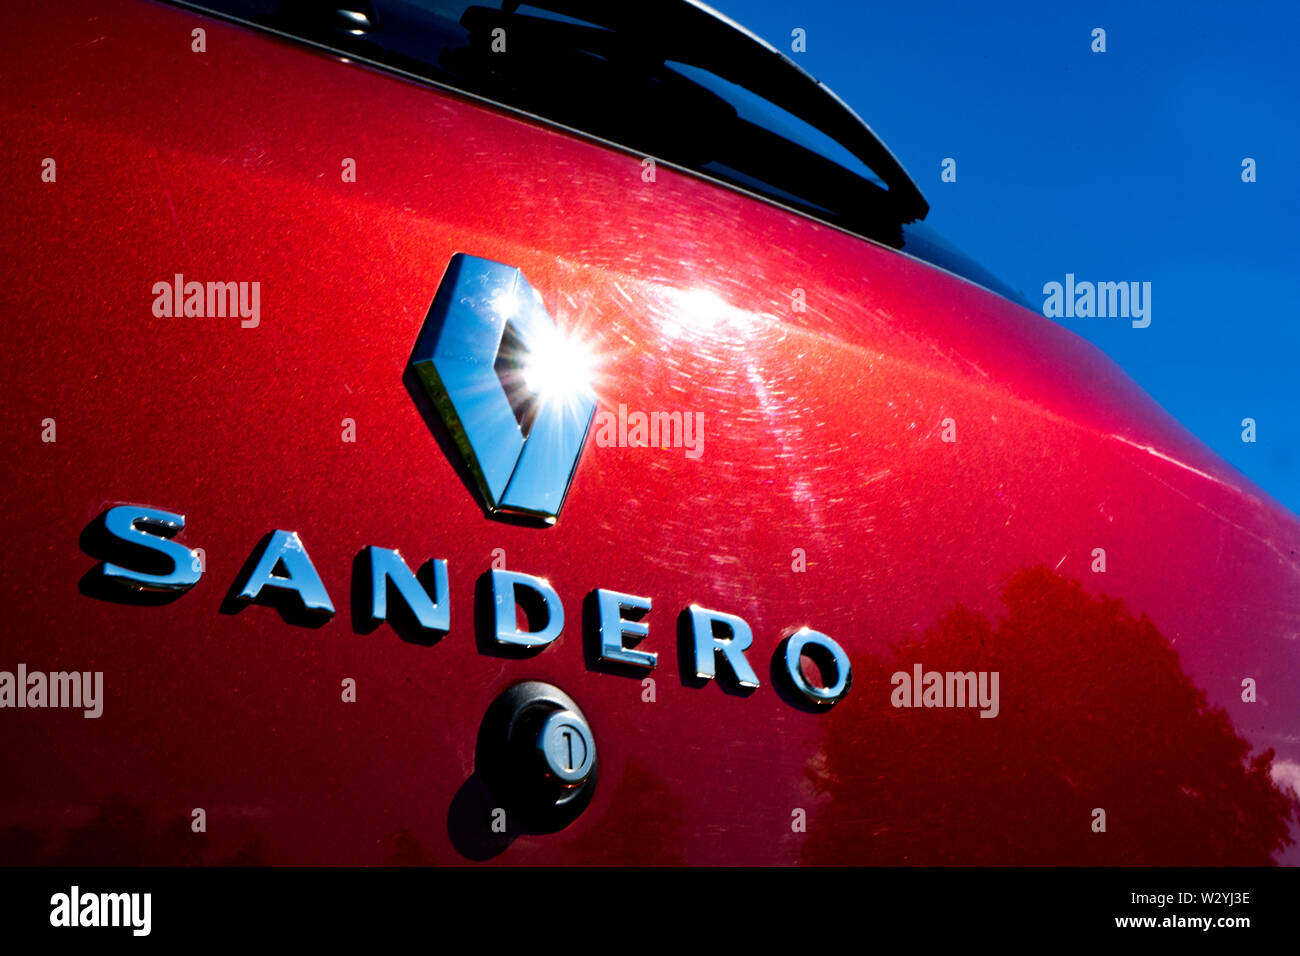 Magdeburg, Germany - June 2019: Renault Sandero logo symbol. Renault - French international automotive brand Stock Photo